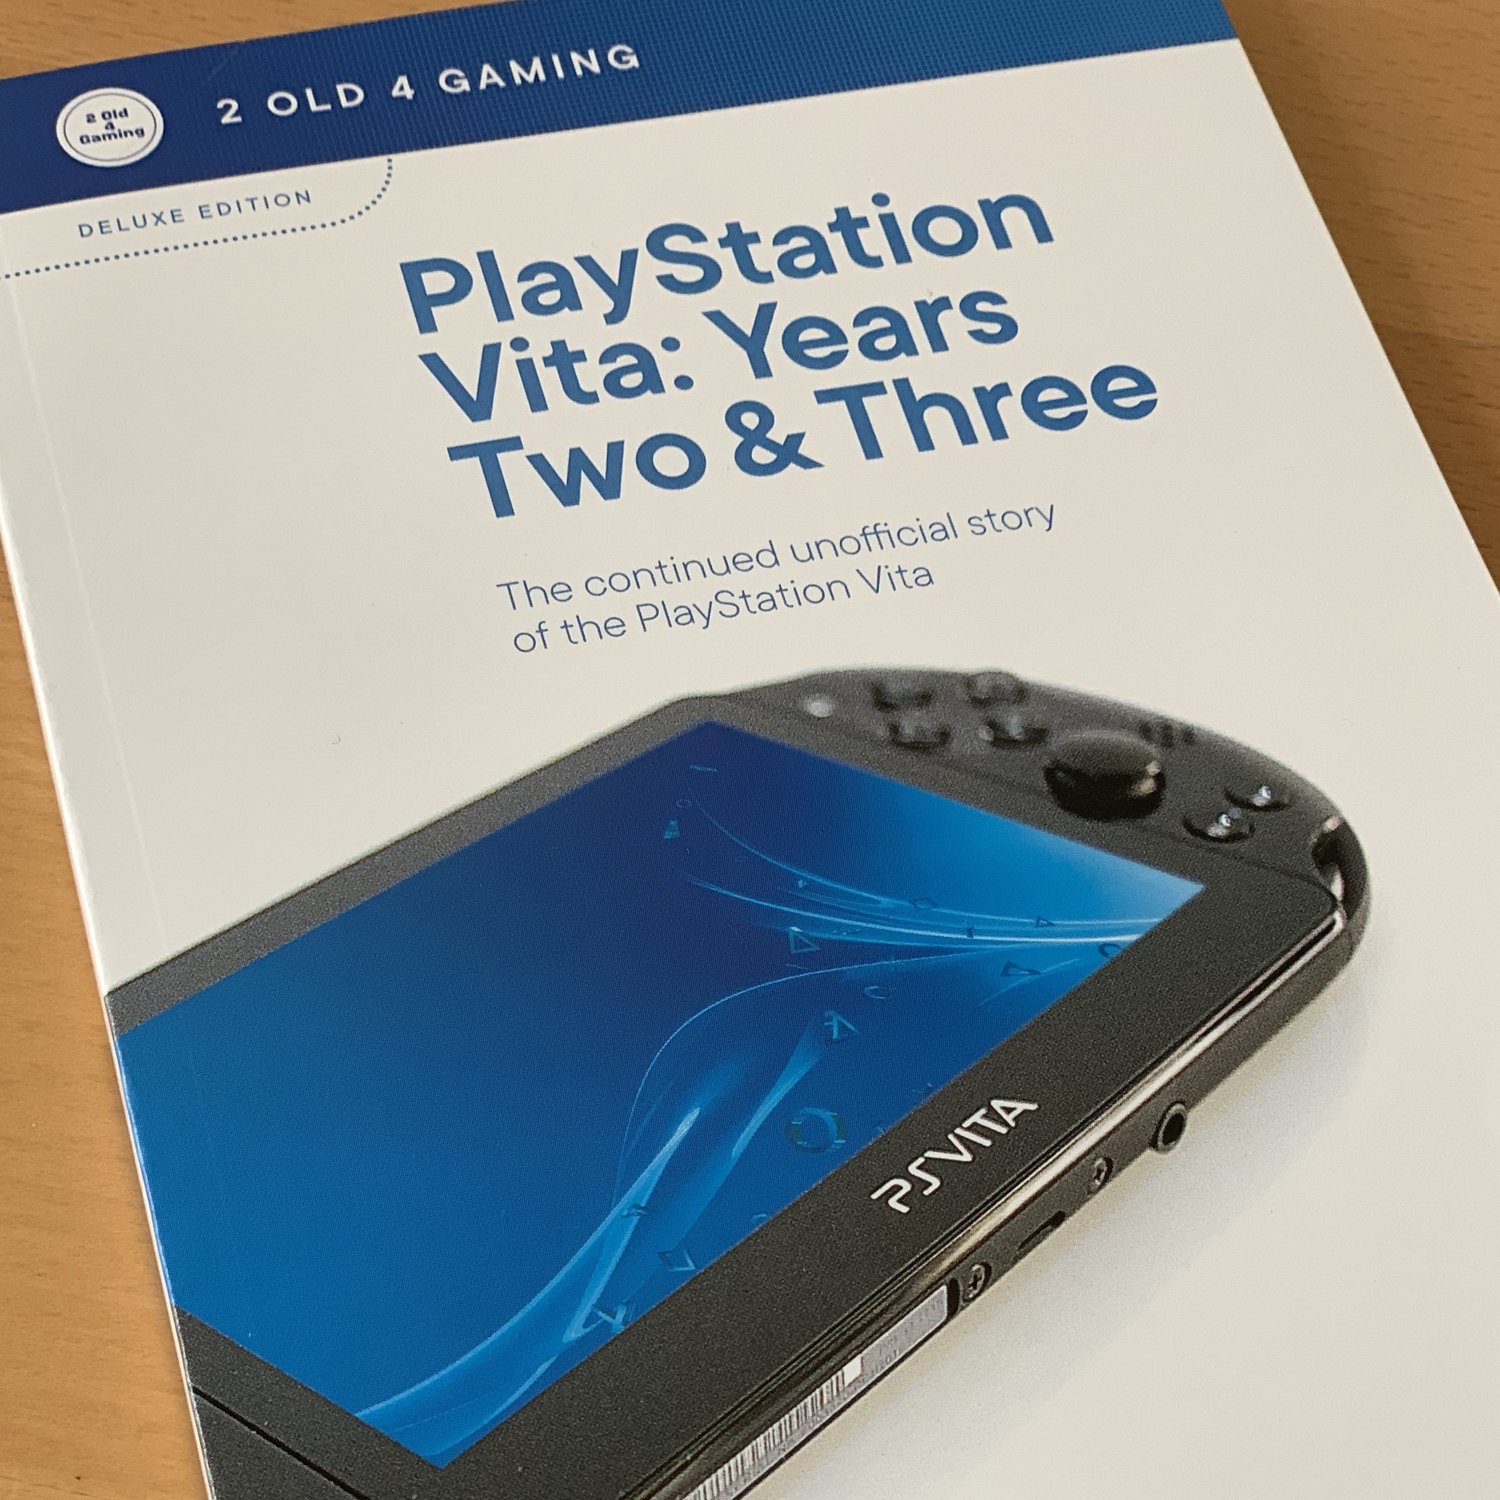 stripe Personally bicycle PlayStation Vita: Year Two & Three - Digital Book - PSVita - PS Vita — 2  Old 4 Gaming